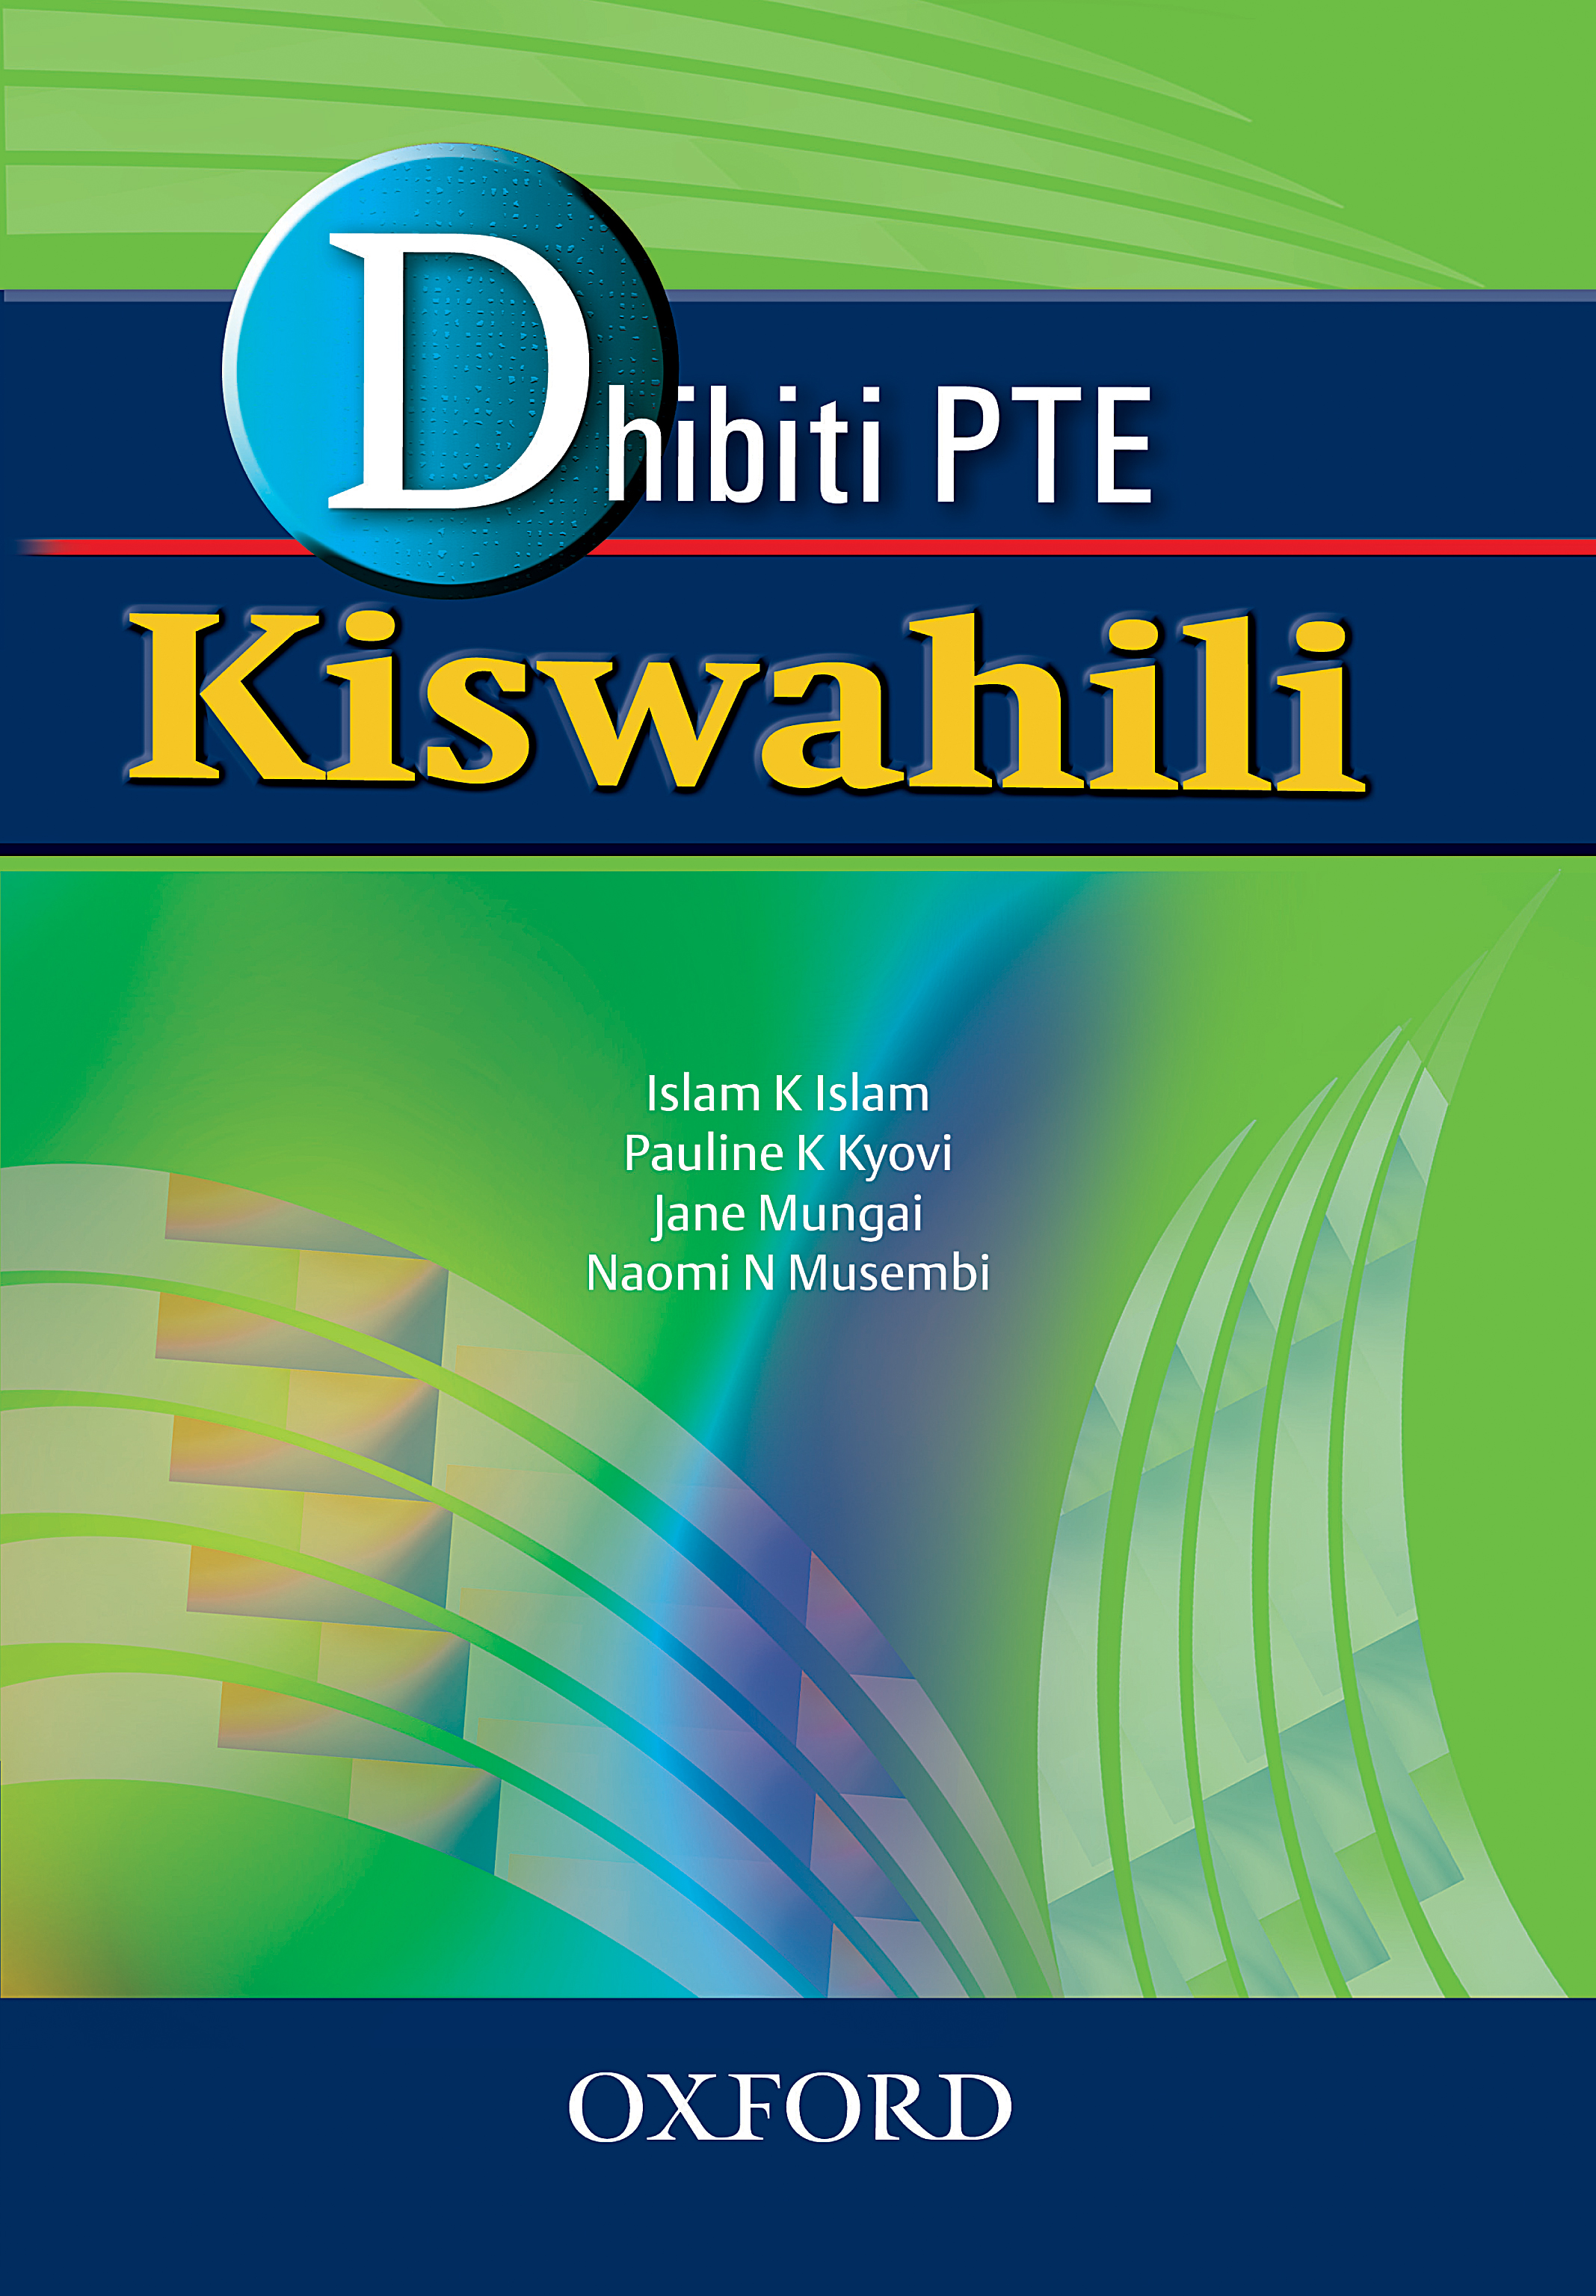 Dhibiti PTE Kiswahili - Book Review